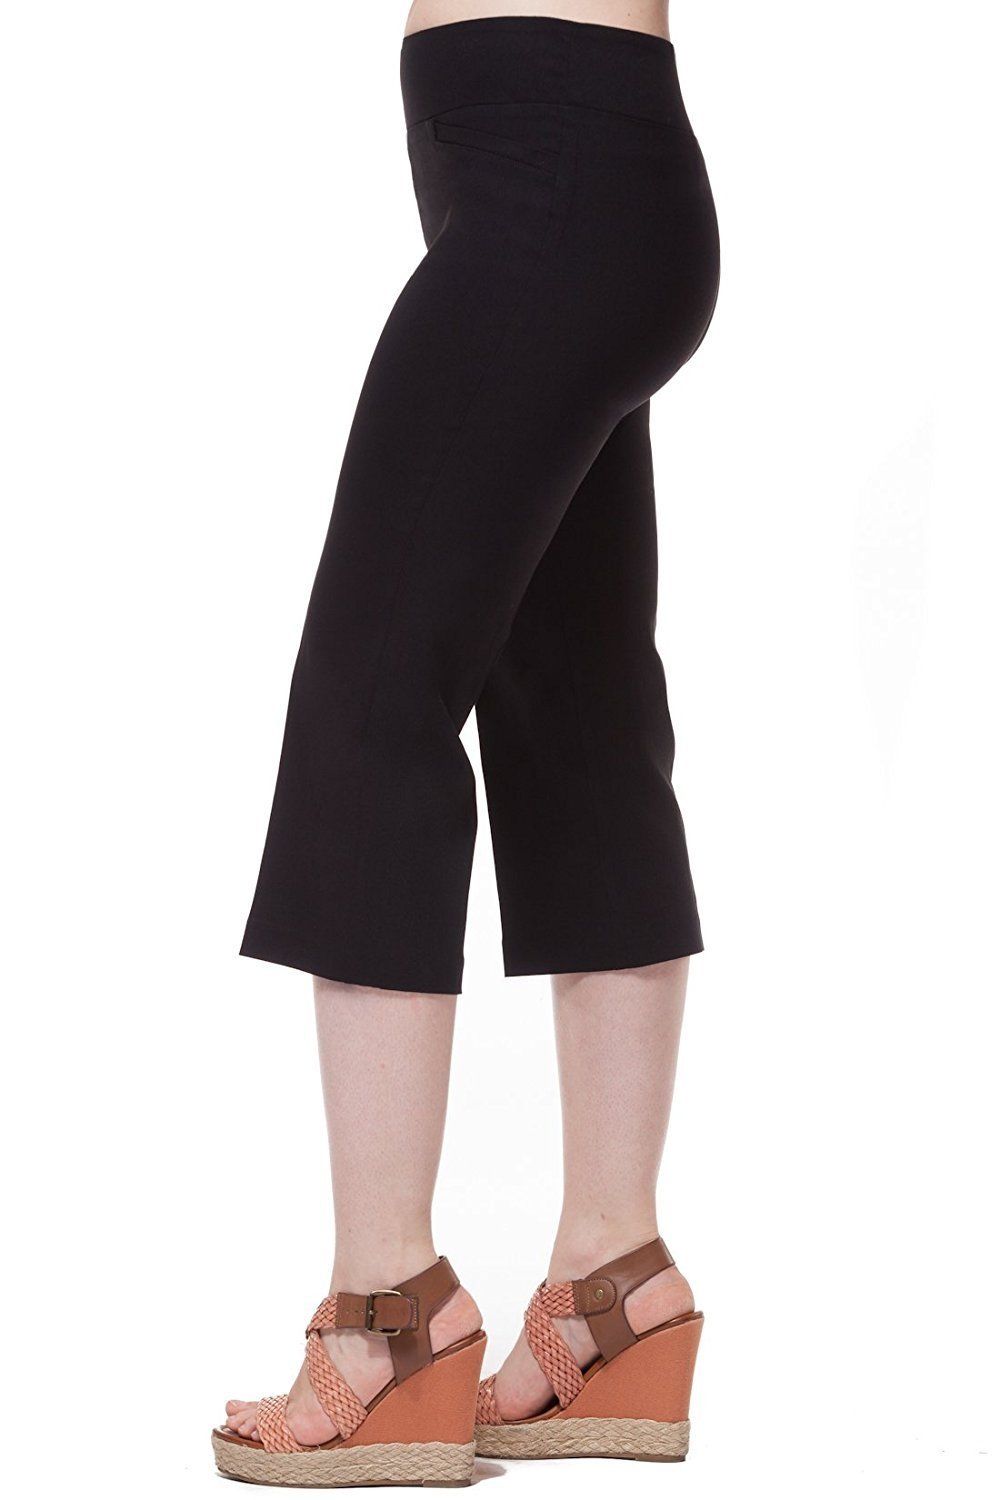 Women's Pull-On Comfort Fit Capri Dress Pants - image 2 of 3